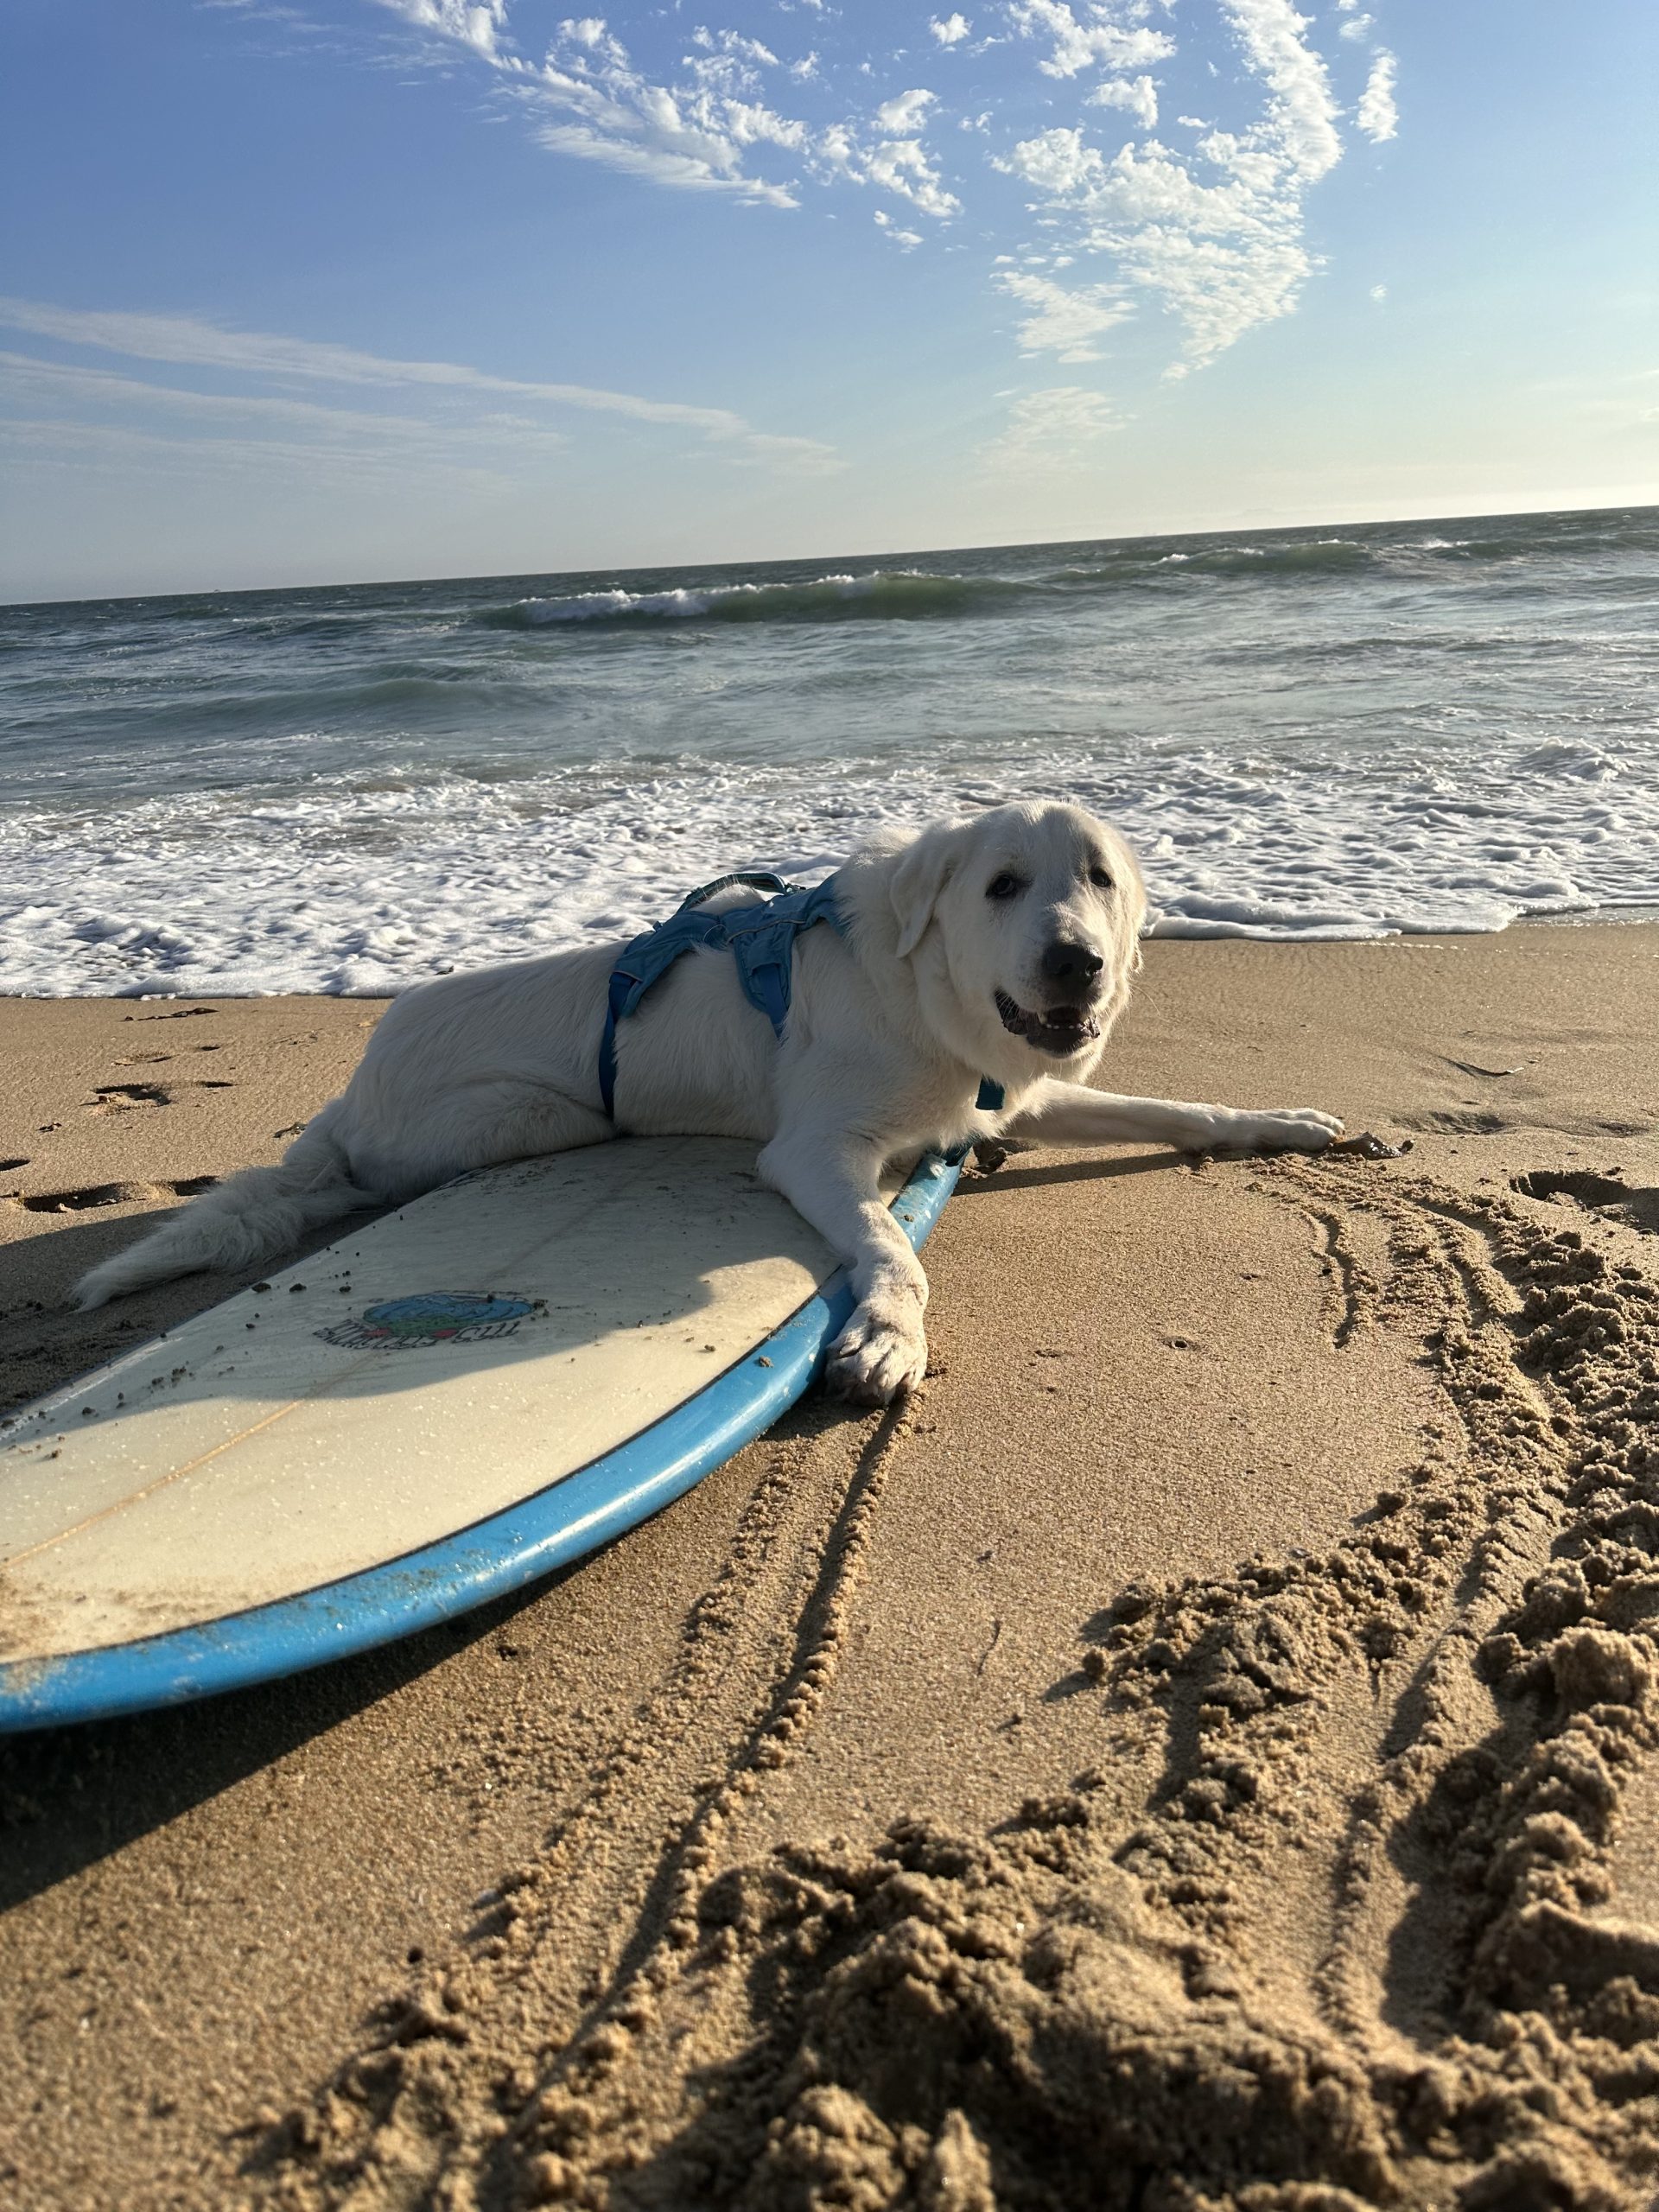 Tyson on a surfboard